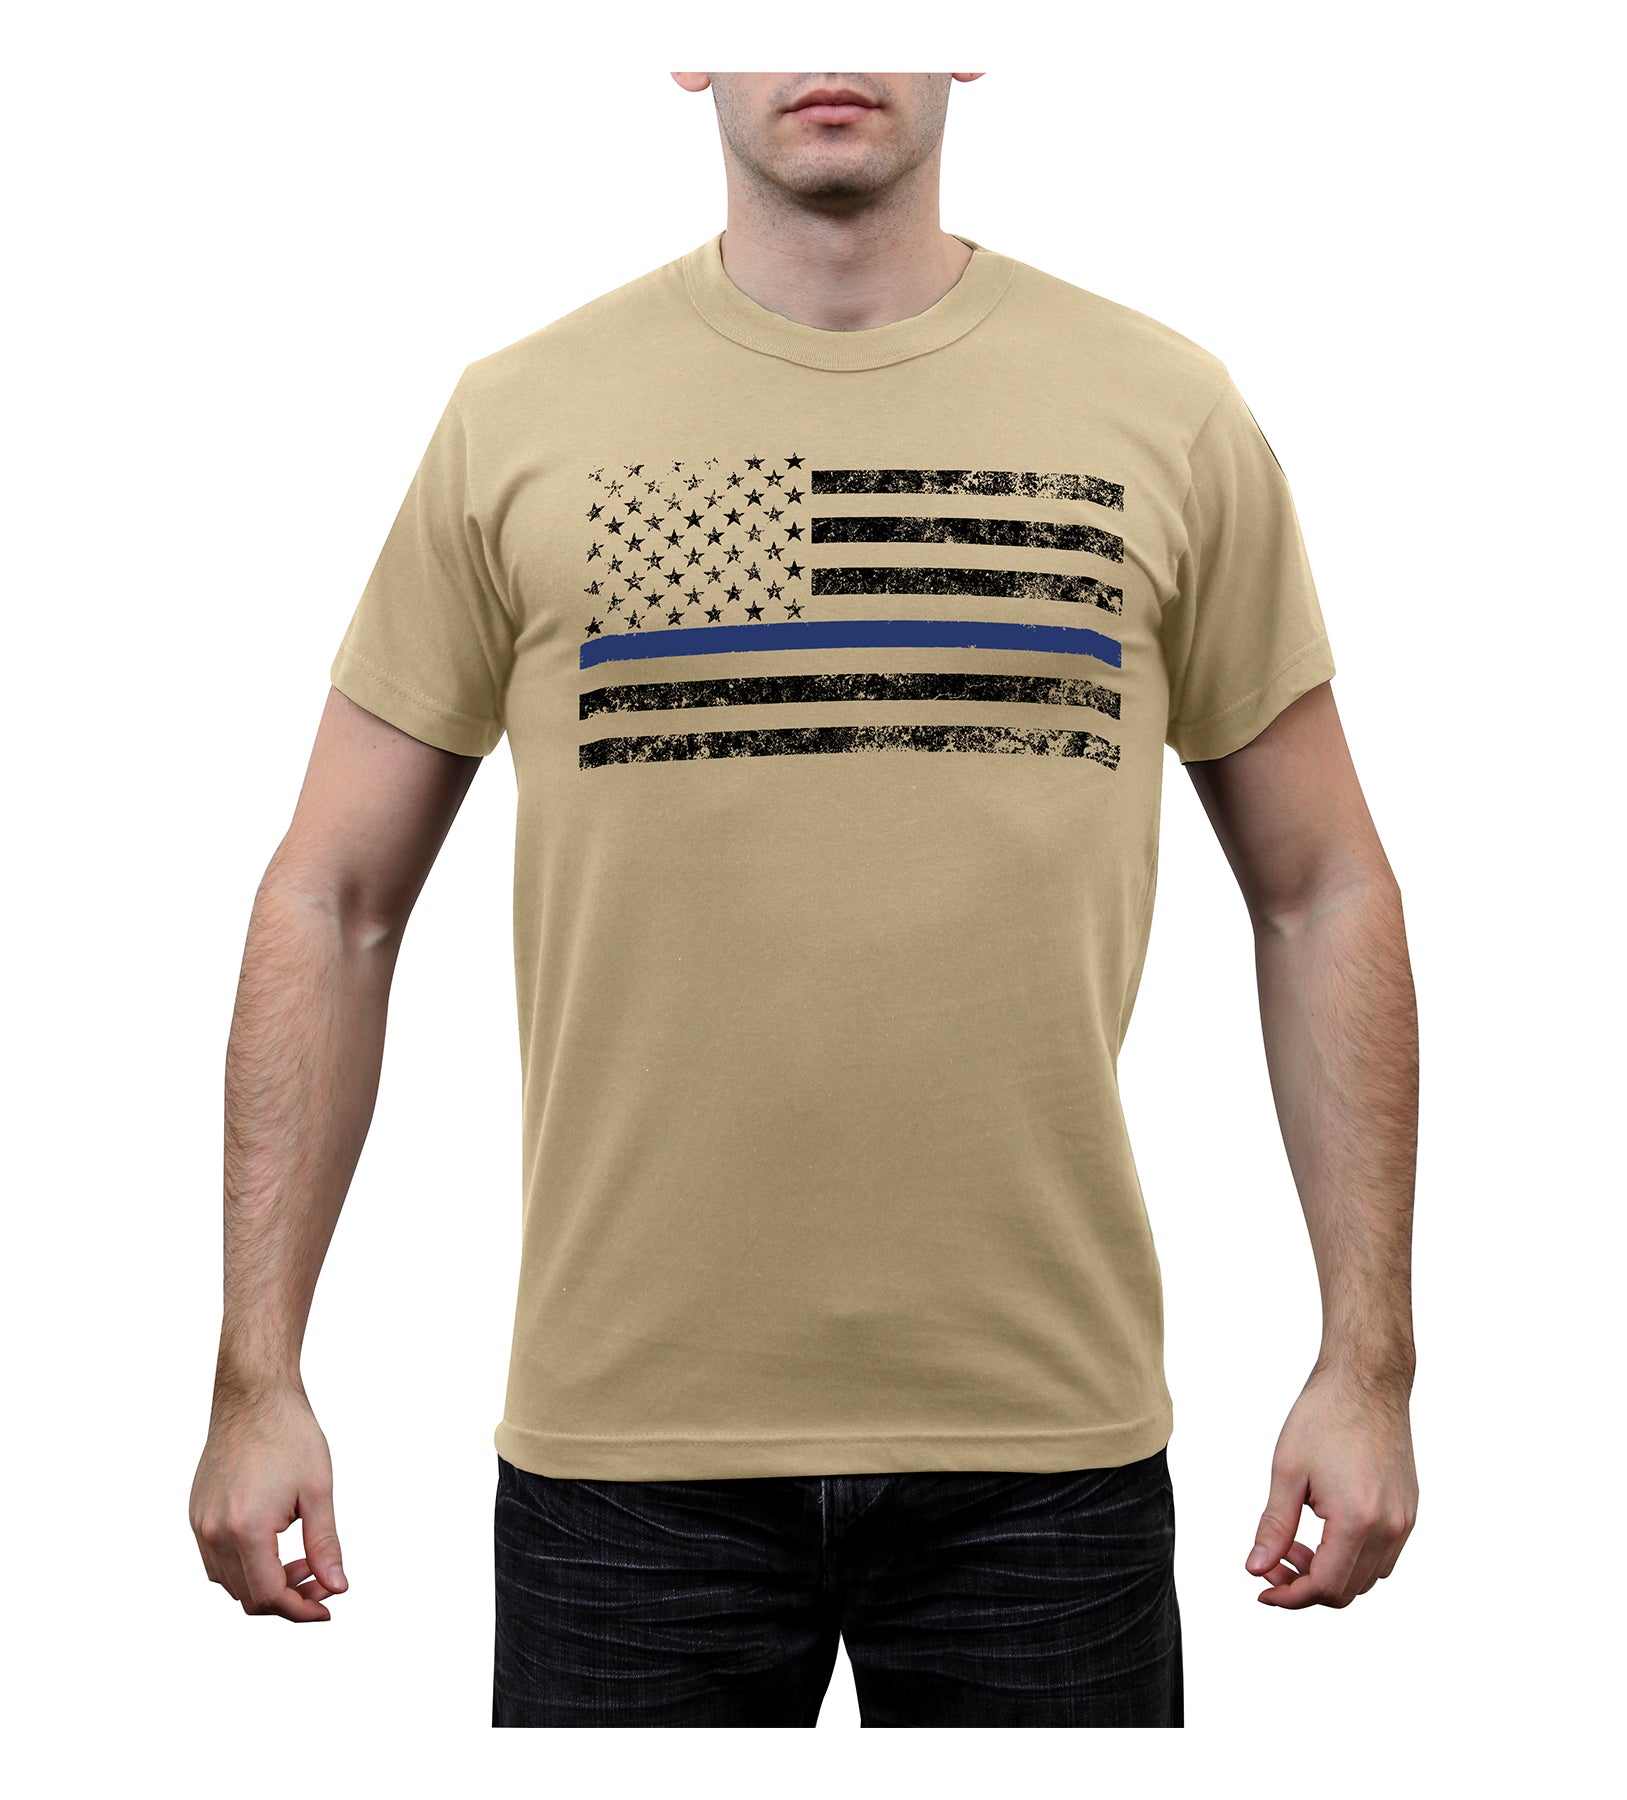 [Public Safety] Cotton Thin Blue Line T-Shirts Police Blue Line - Desert Sand